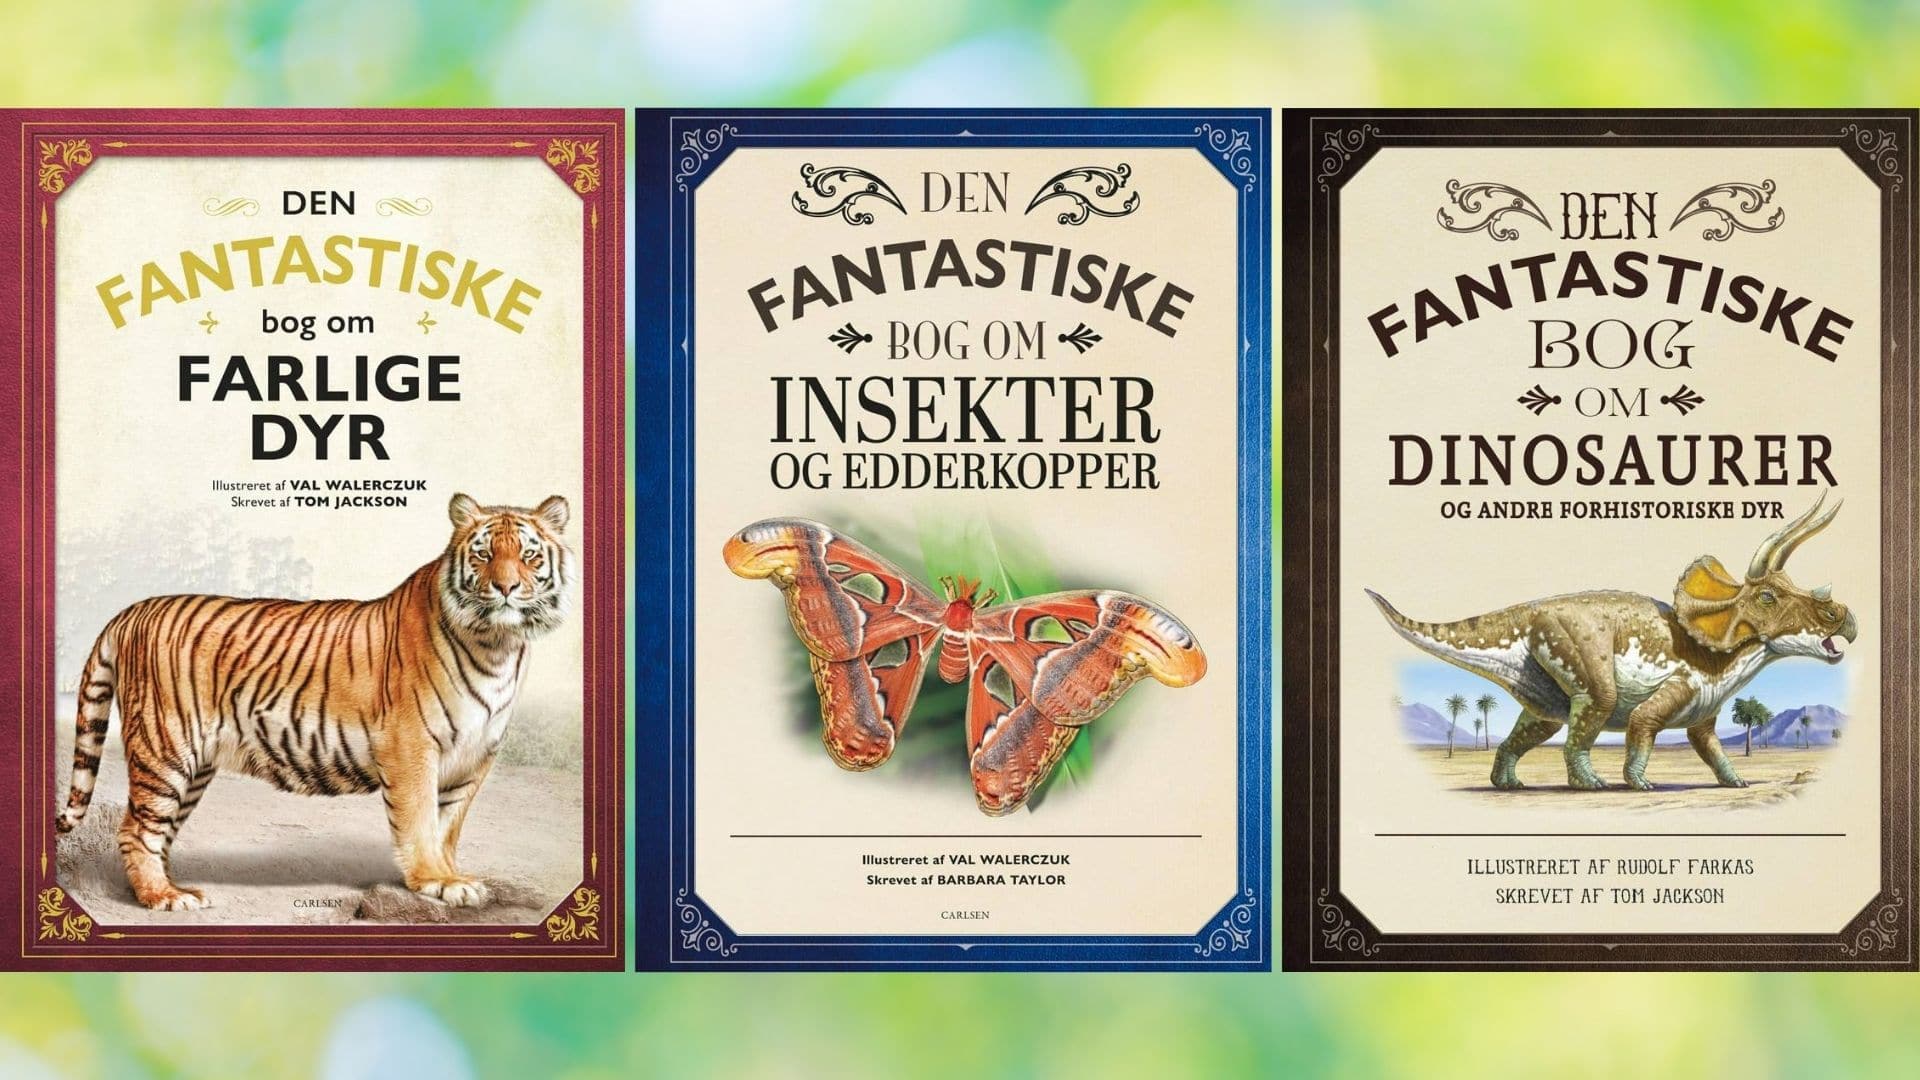 Den fantastiske bog om farlige dyr, den fantastiske bog, den fantastiske bog om insekter og edderkopper